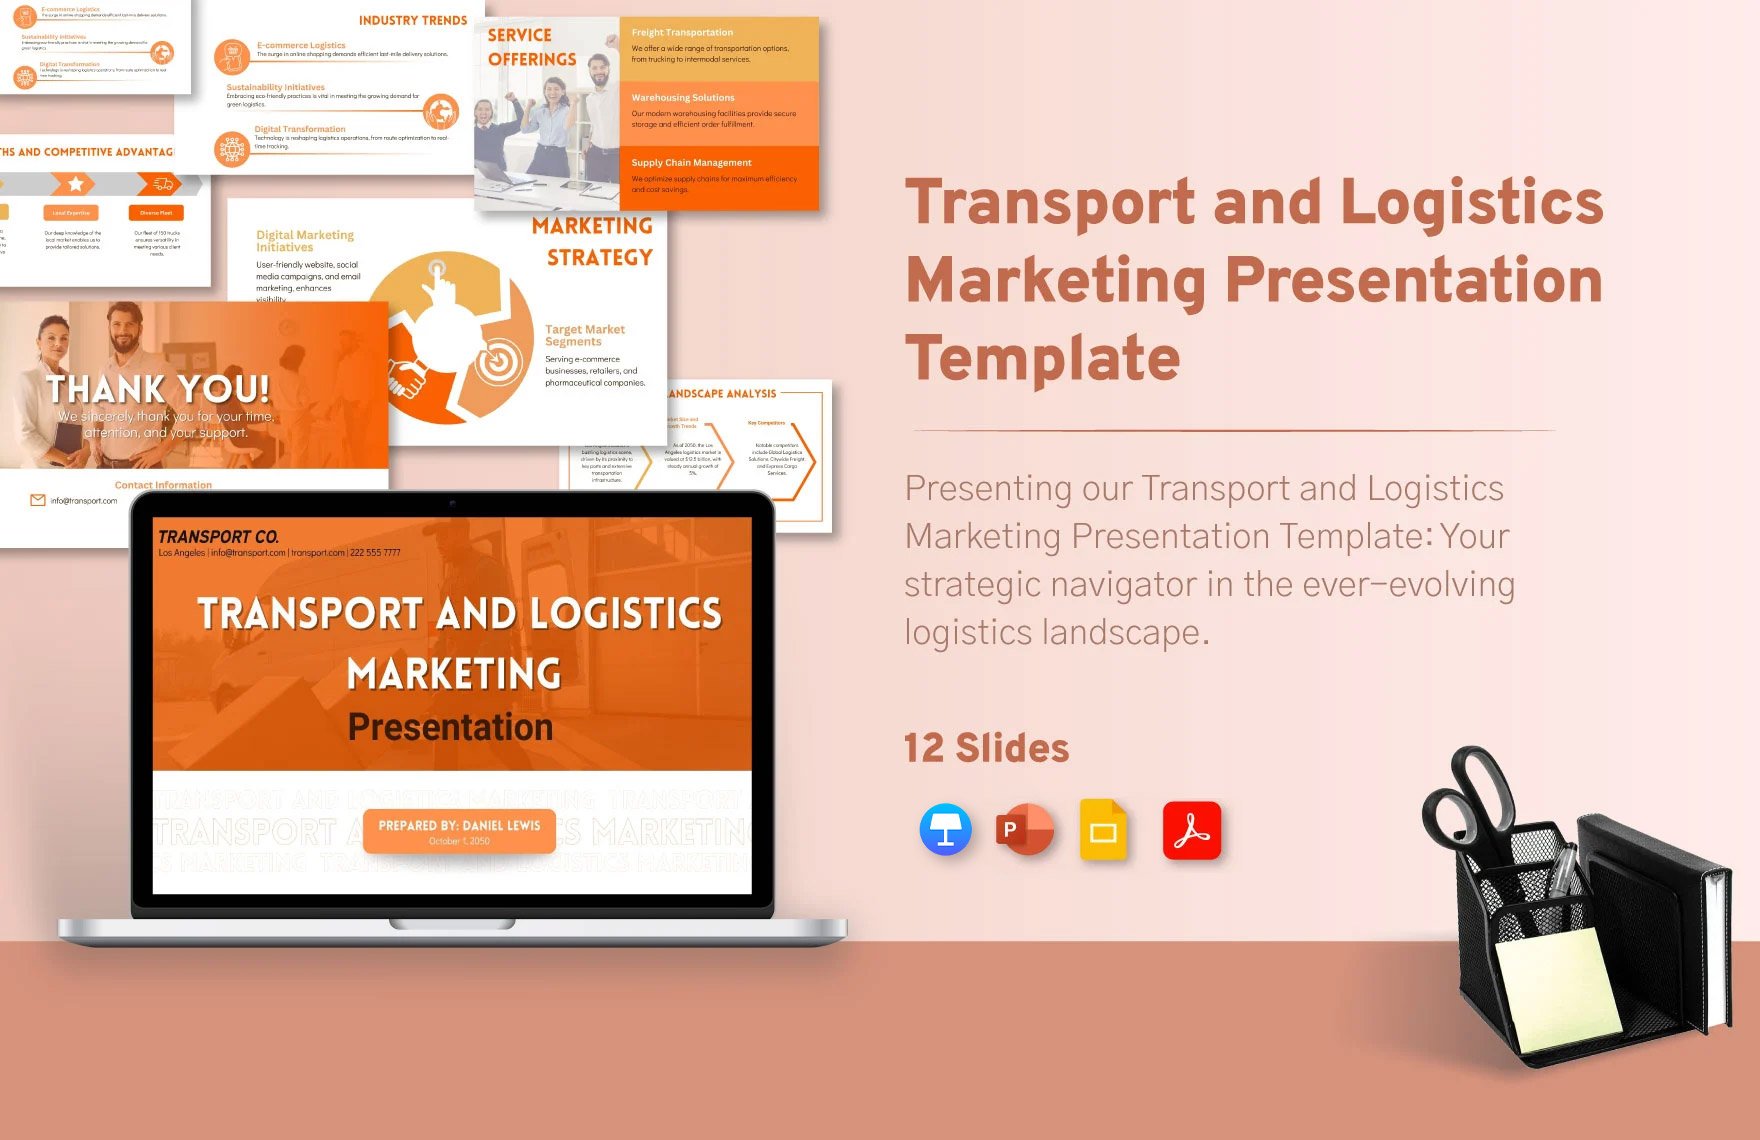 Transport and Logistics Marketing Presentation Template